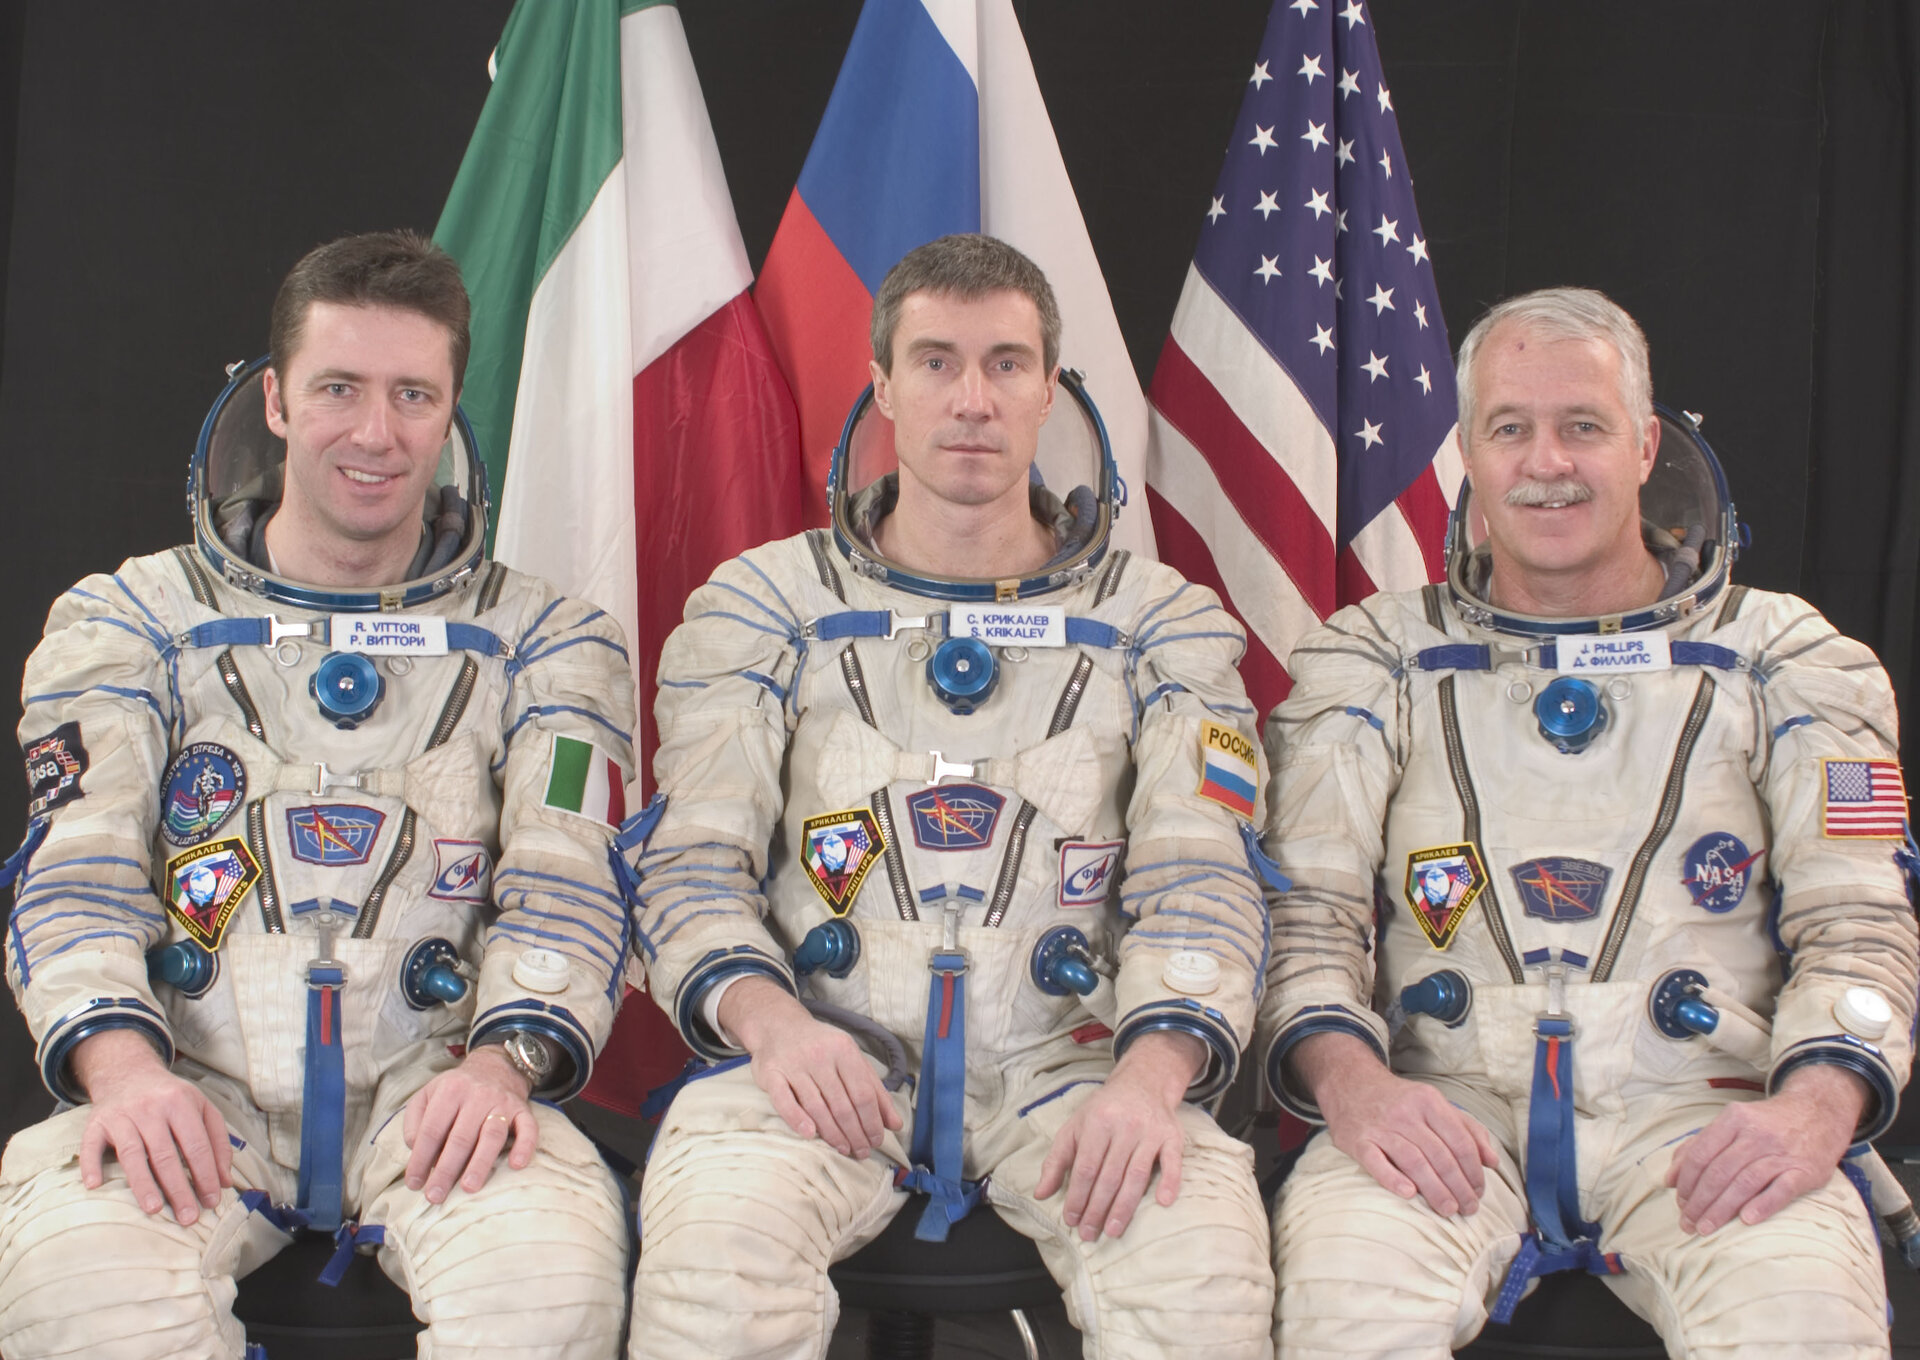 Soyuz TMA-6 crew